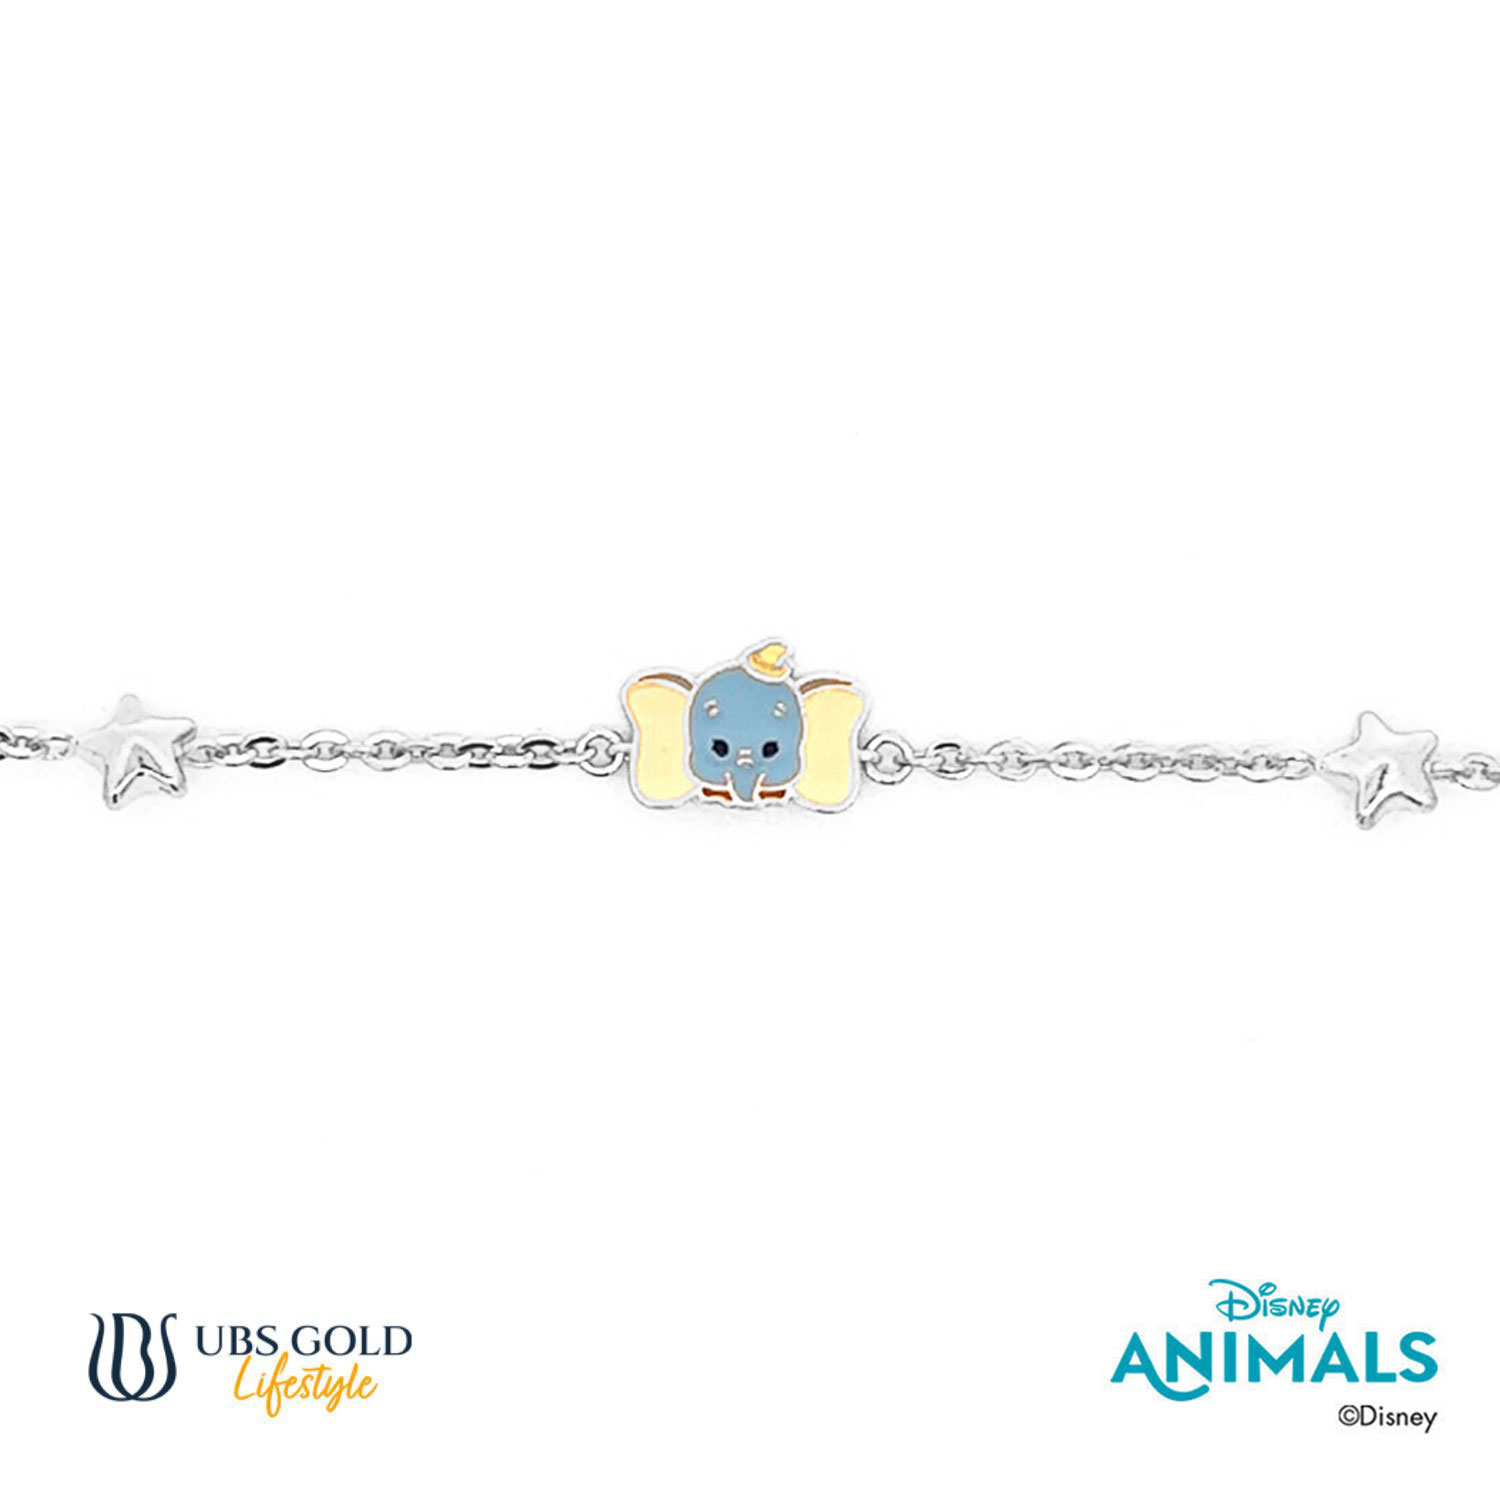 UBS Gelang Emas Anak Disney Animals - Hgy0129 - 17K